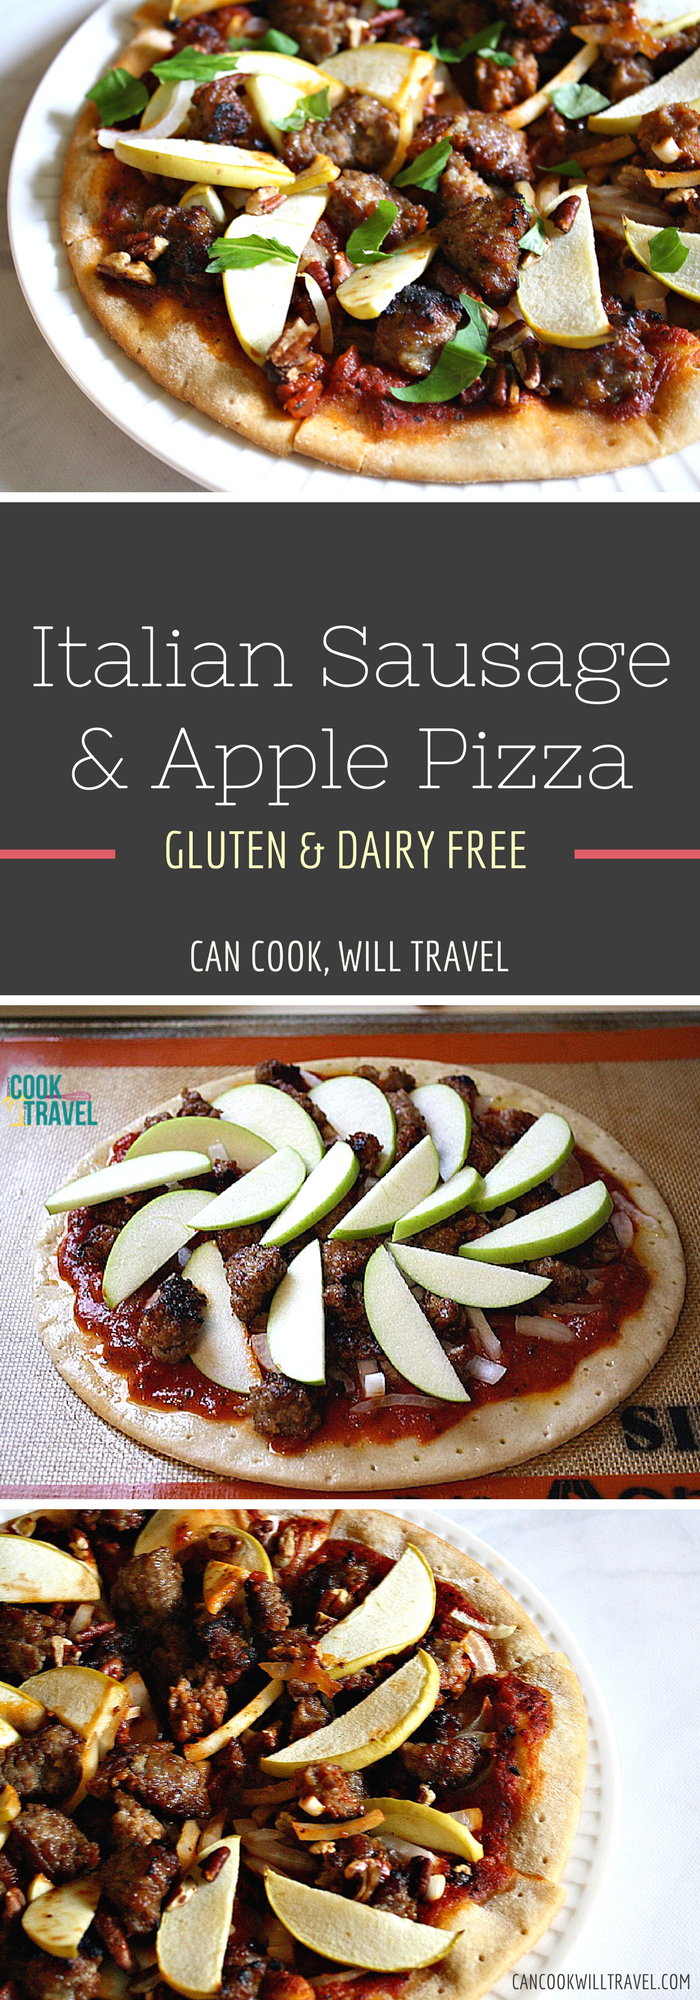 Italian Sausage & Apple Pizza_Collage2